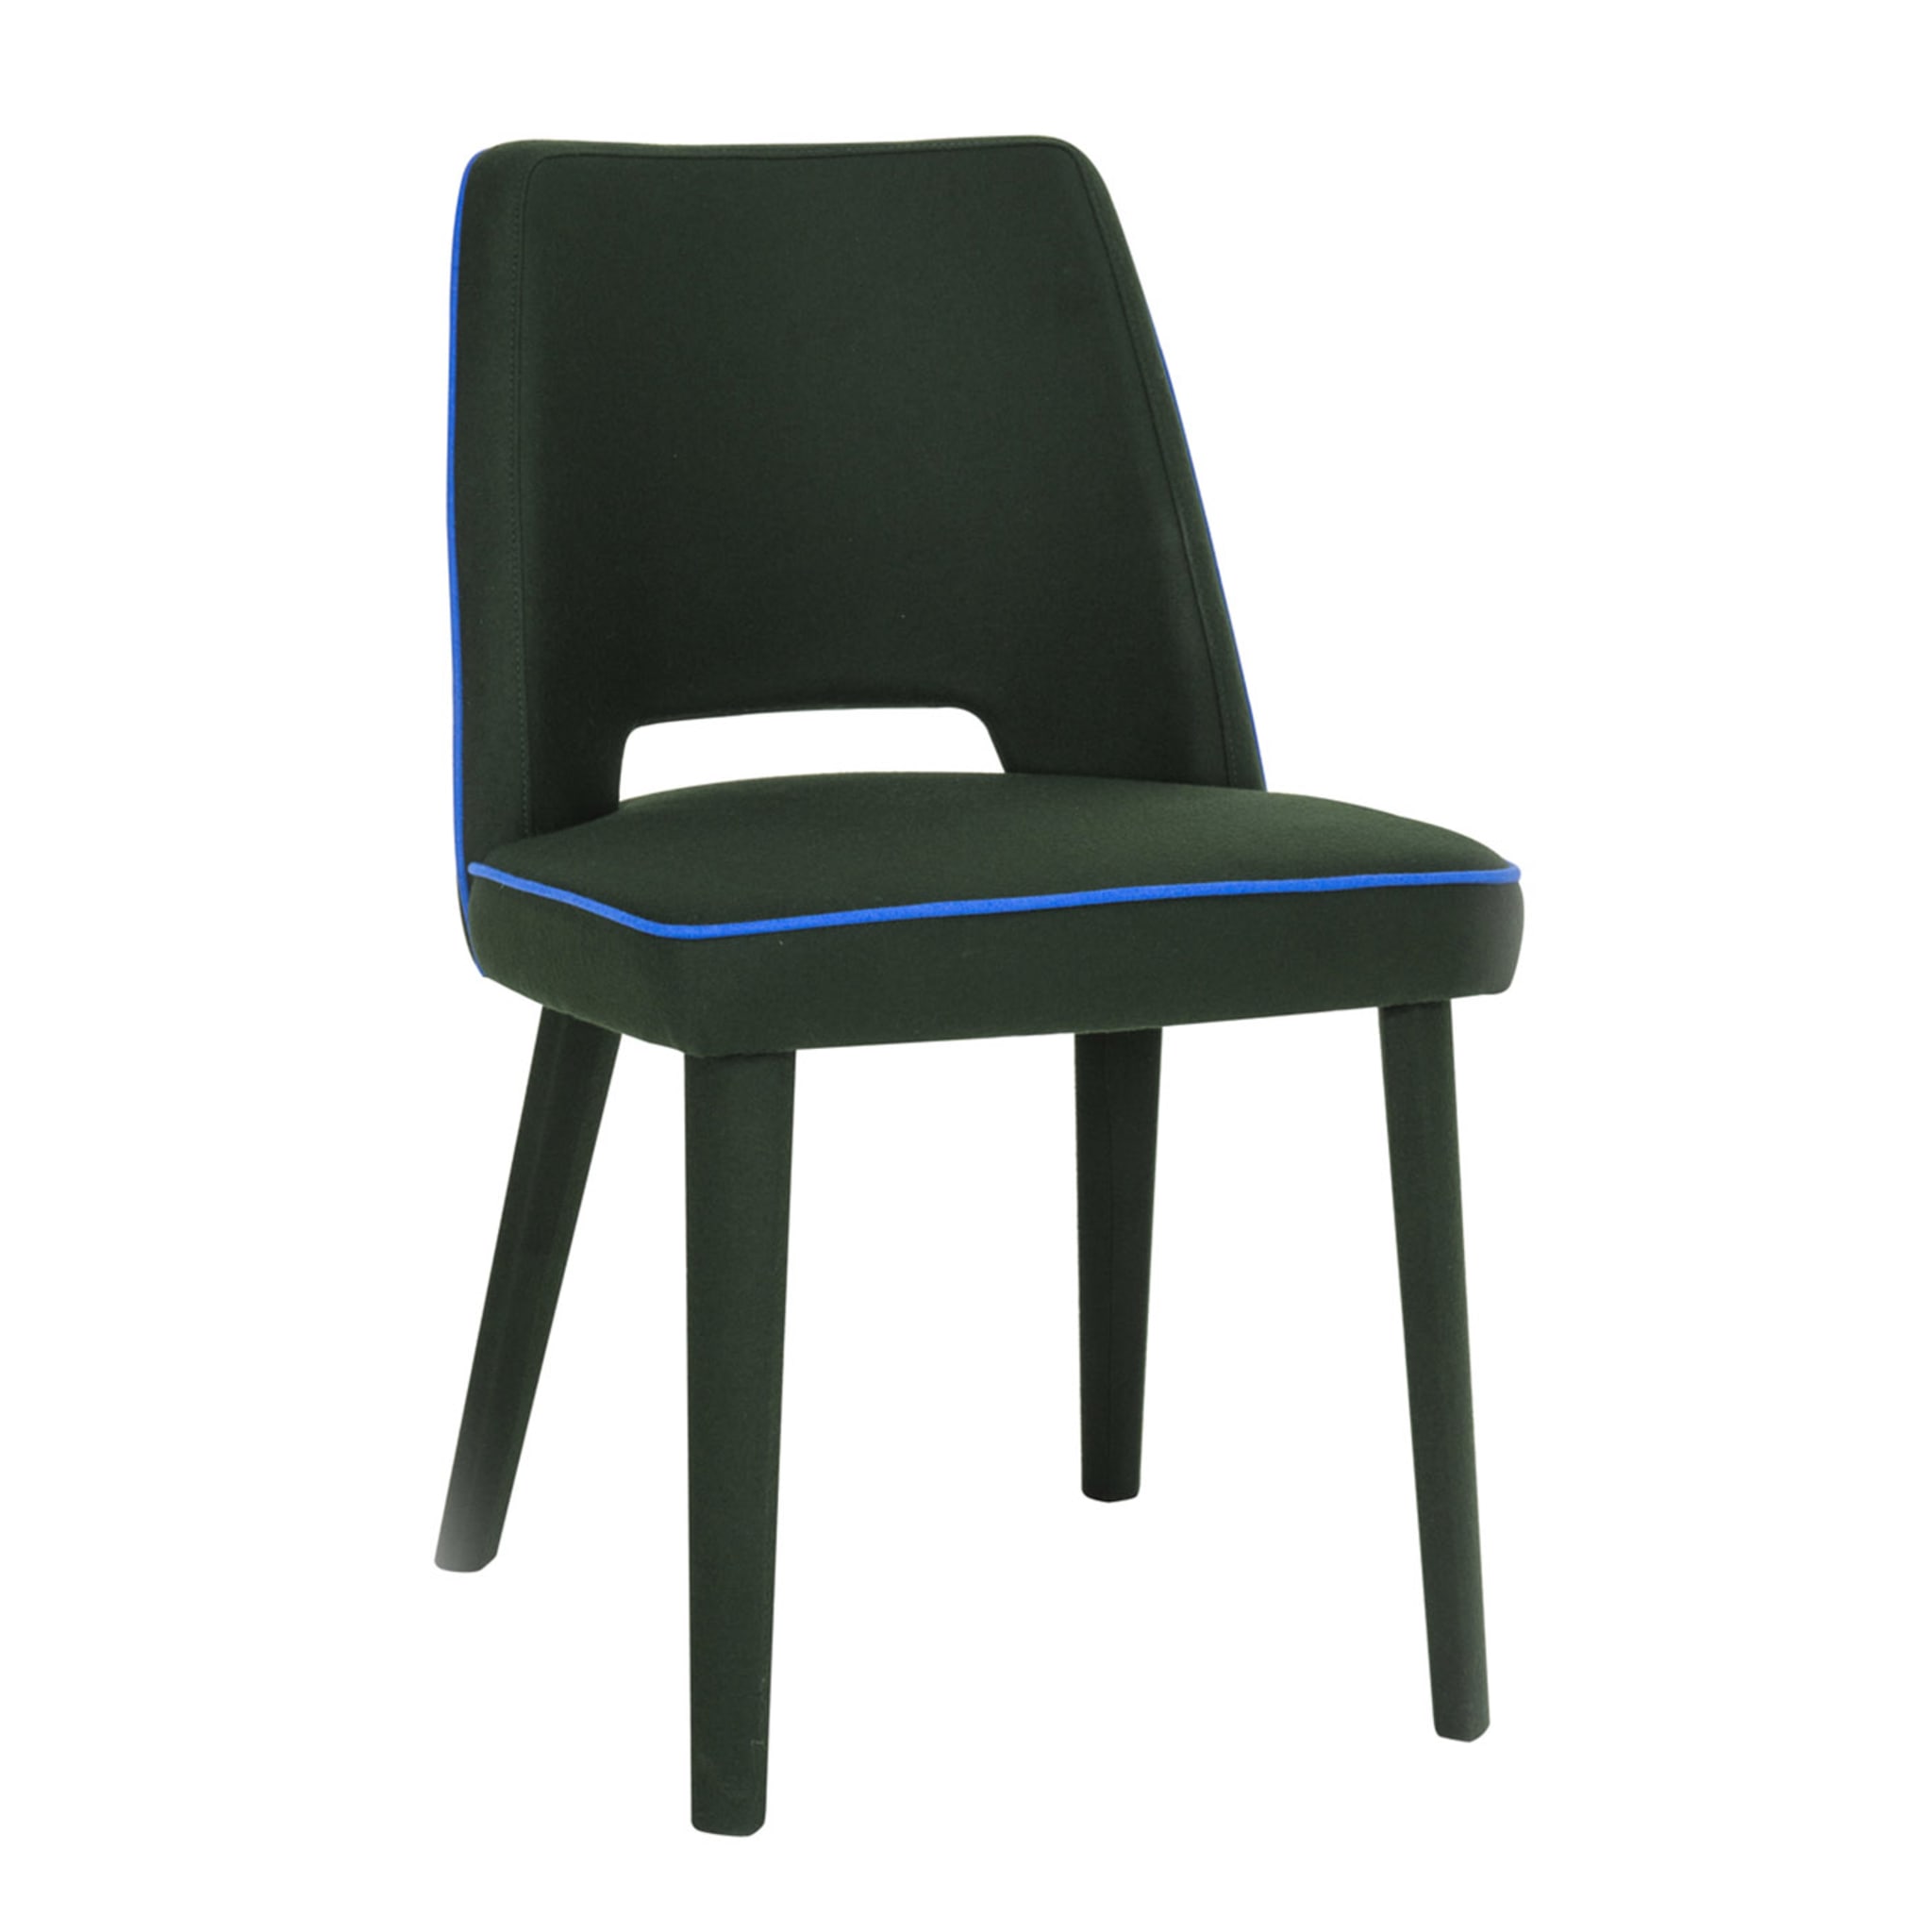 Grace Green & Blue Chair by P. Borgonovo - Alternative view 1